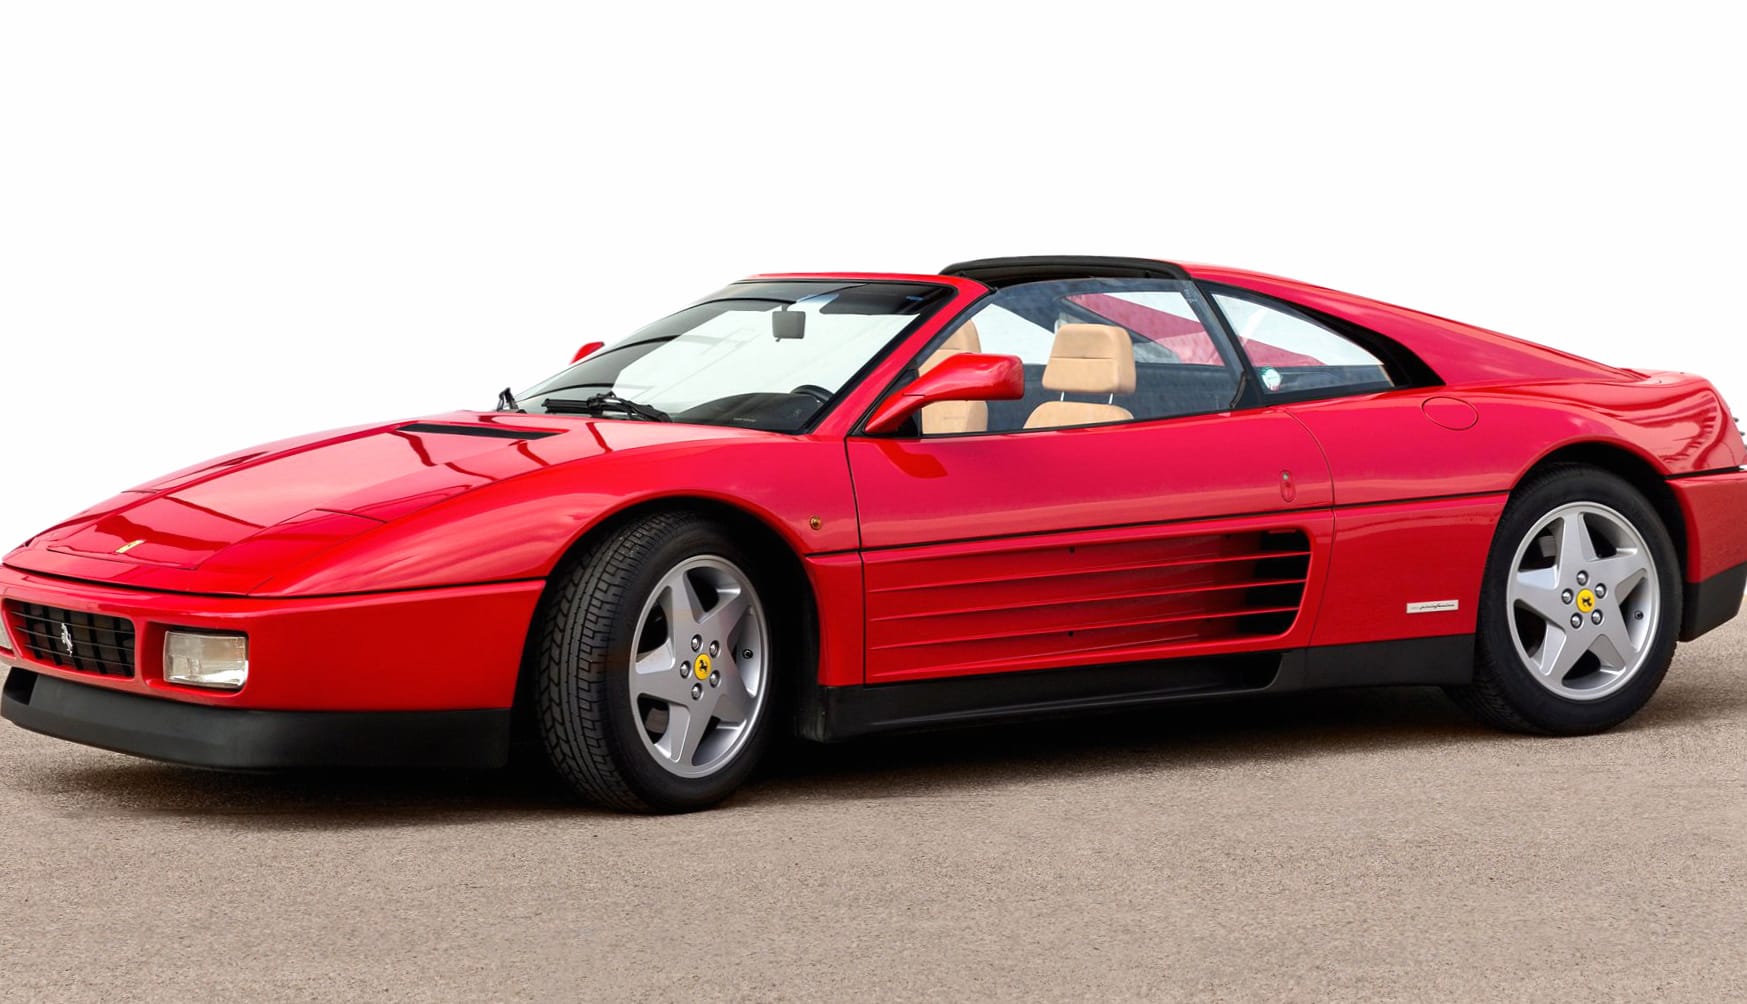 Ferrari 348 TS at 1280 x 960 size wallpapers HD quality